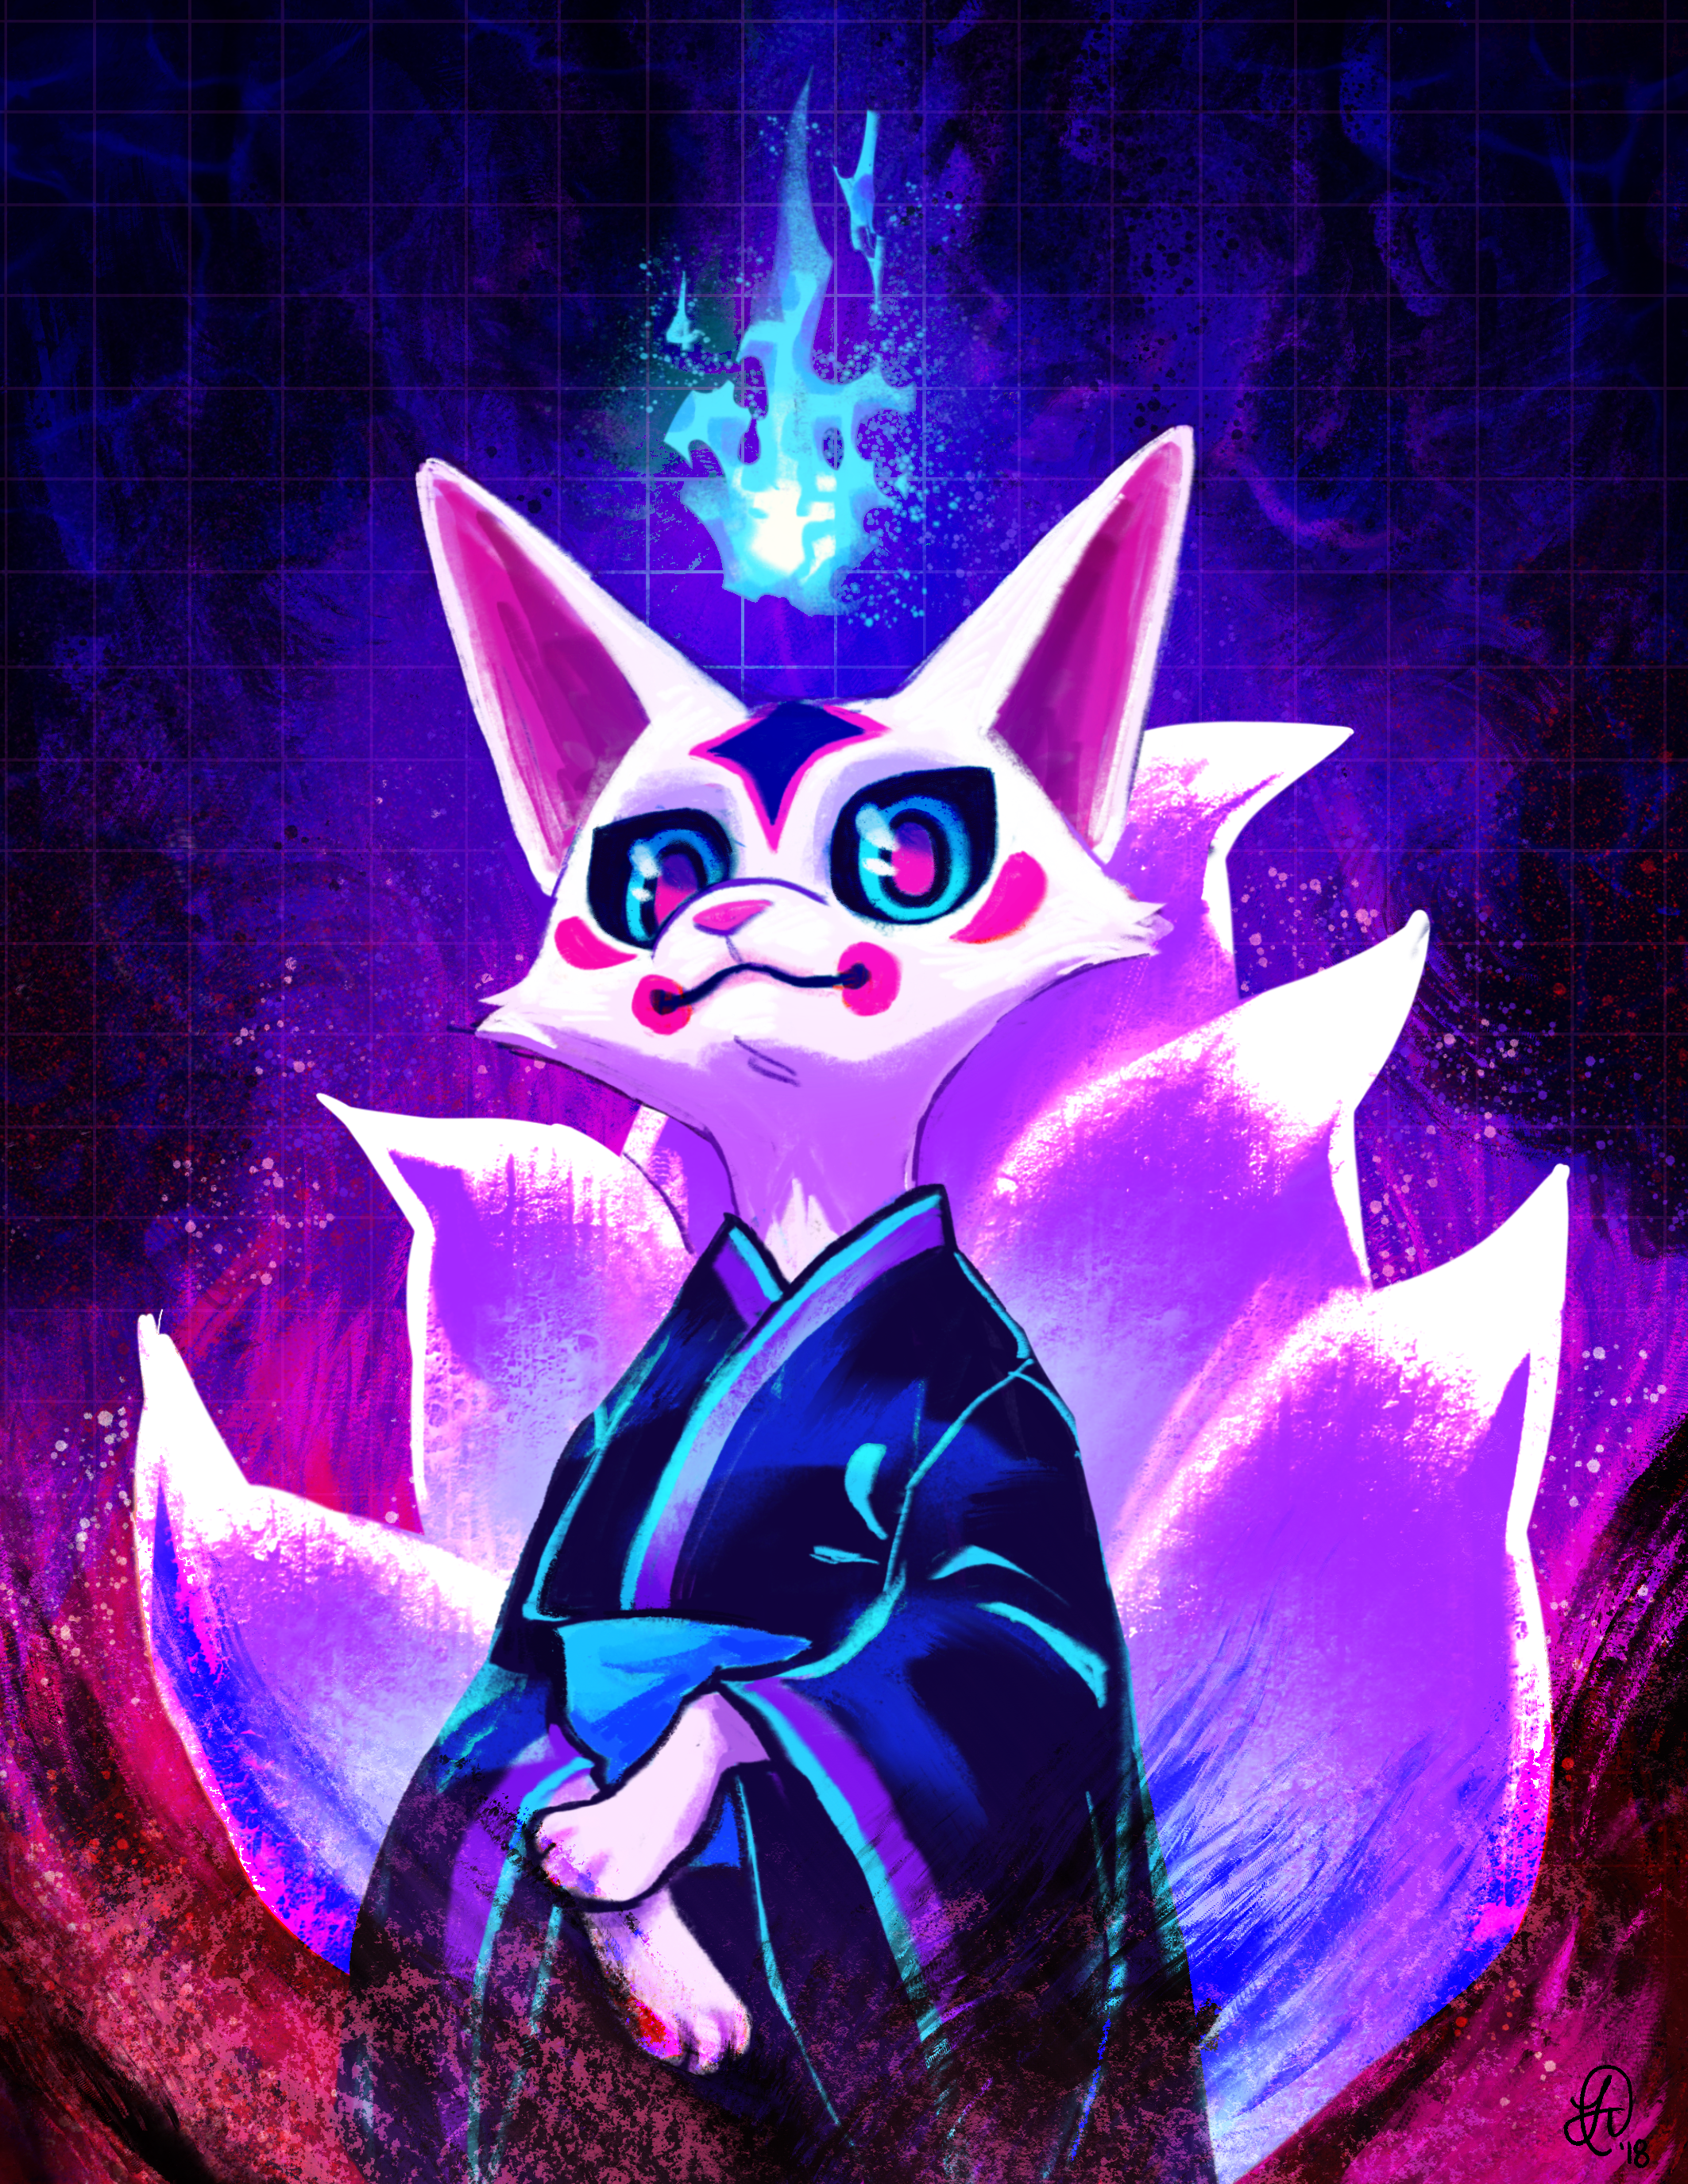 Original Character: Kitsune